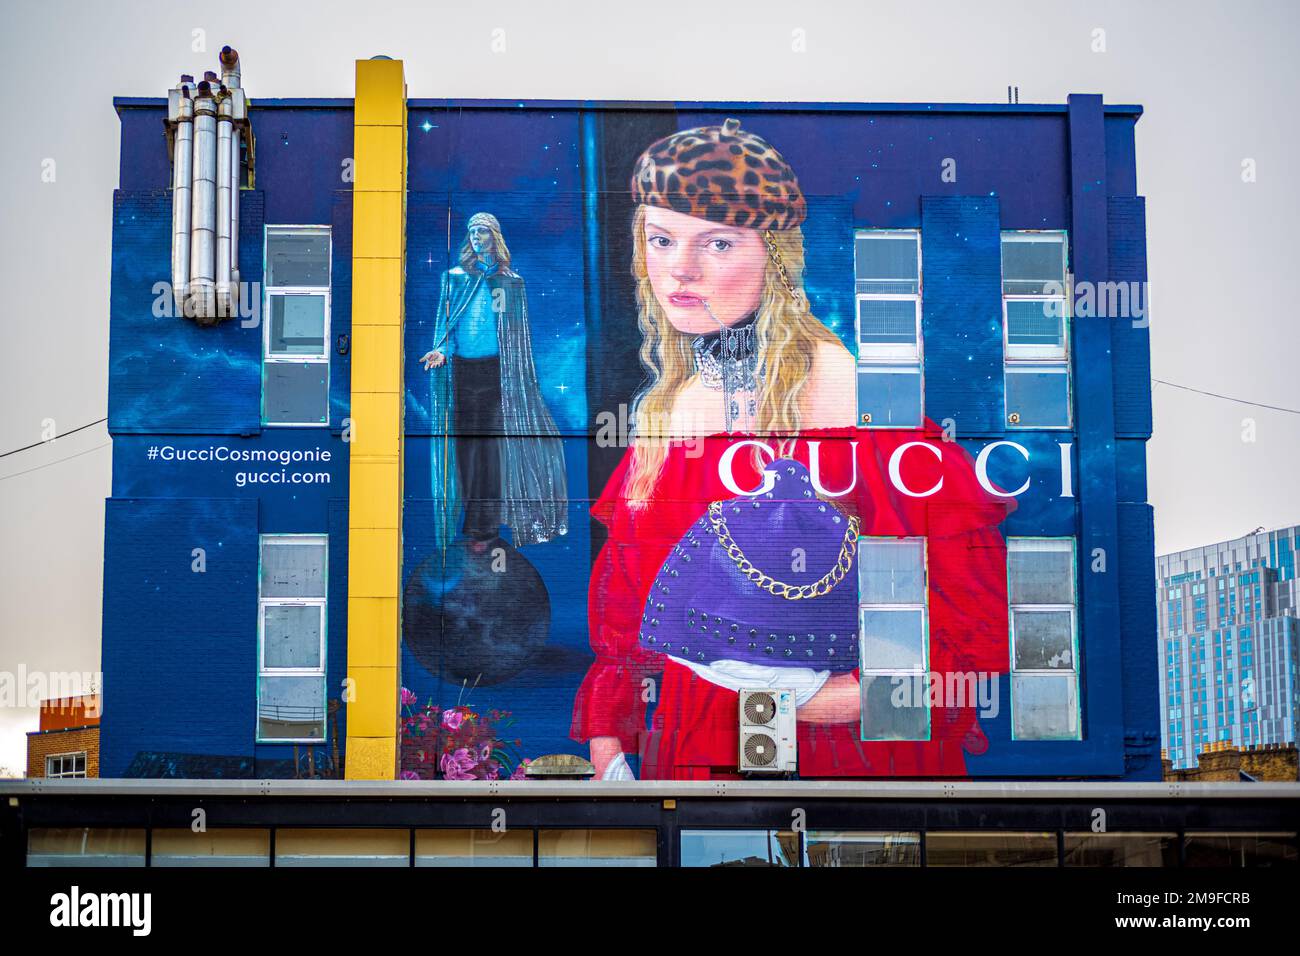 Gucci Cosmogonie Cruise campagna 2023 Londra UK. Gucci London Artwall Brick Lane East London. Gucci Mural London Brick Lane. Foto Stock